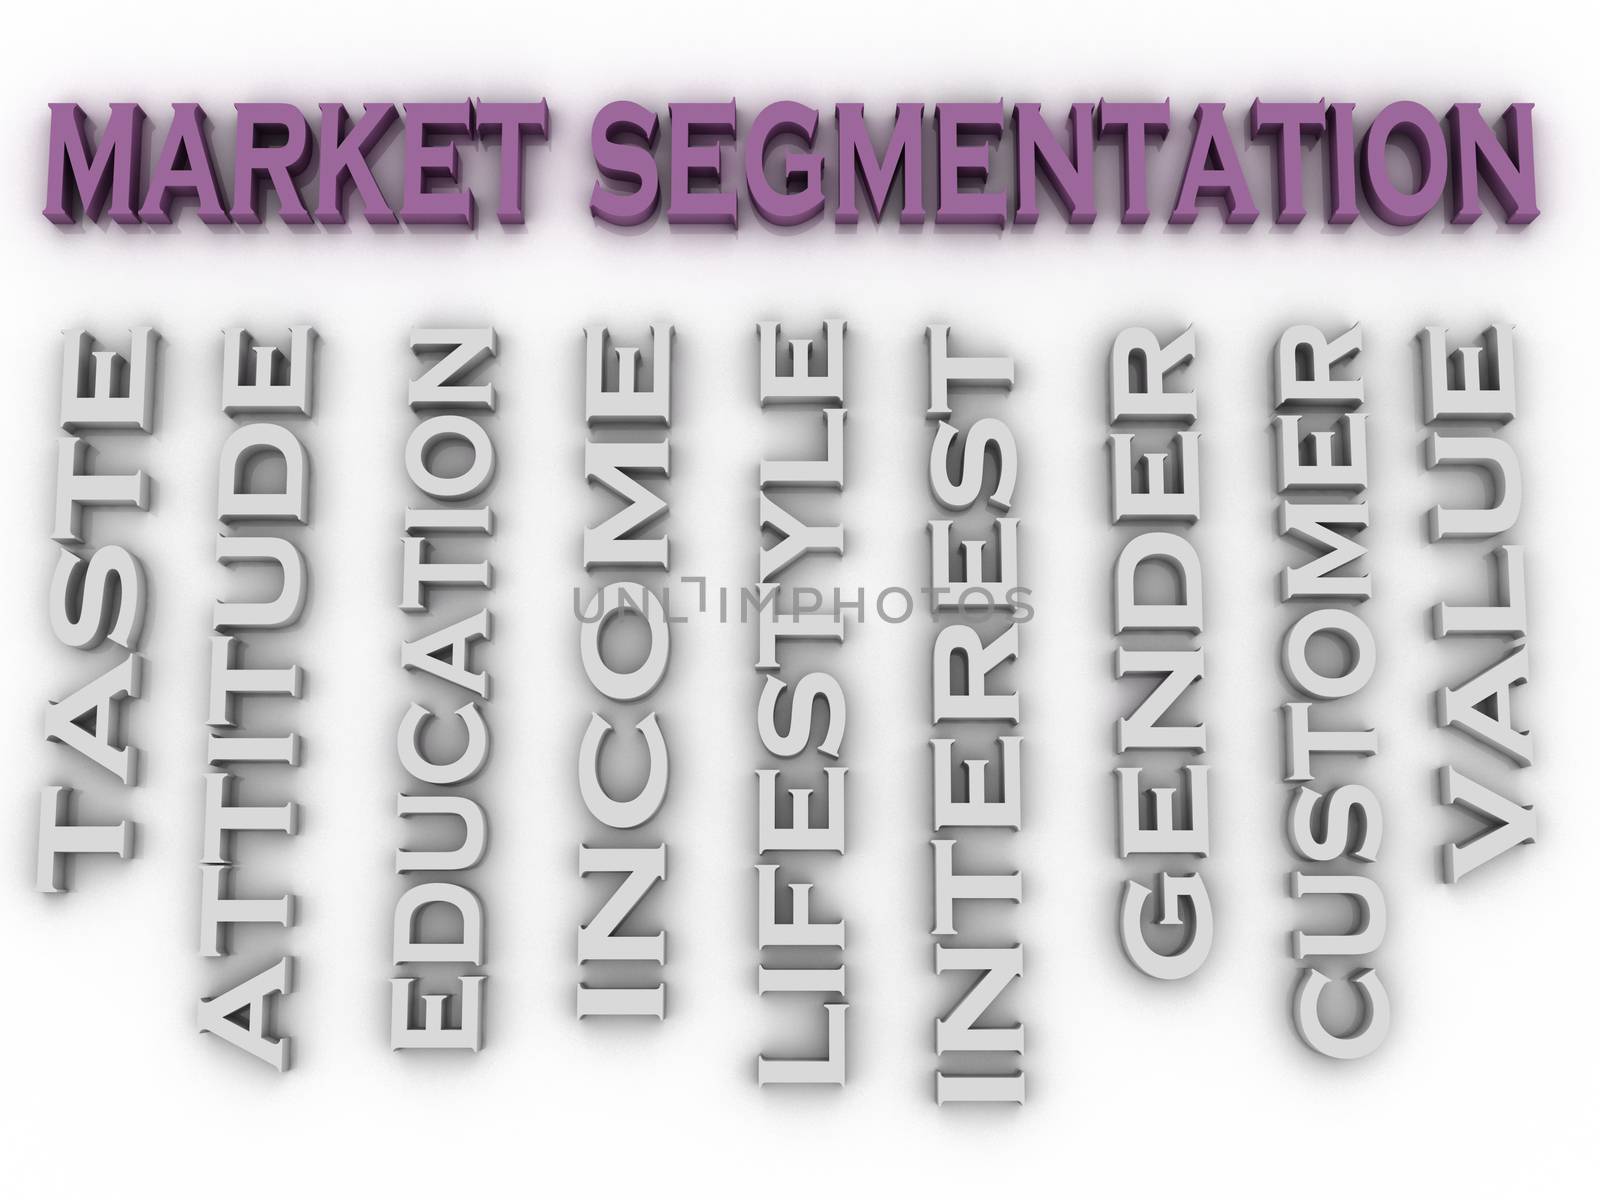 3d image Market segmentation issues concept word cloud backgrou by dacasdo